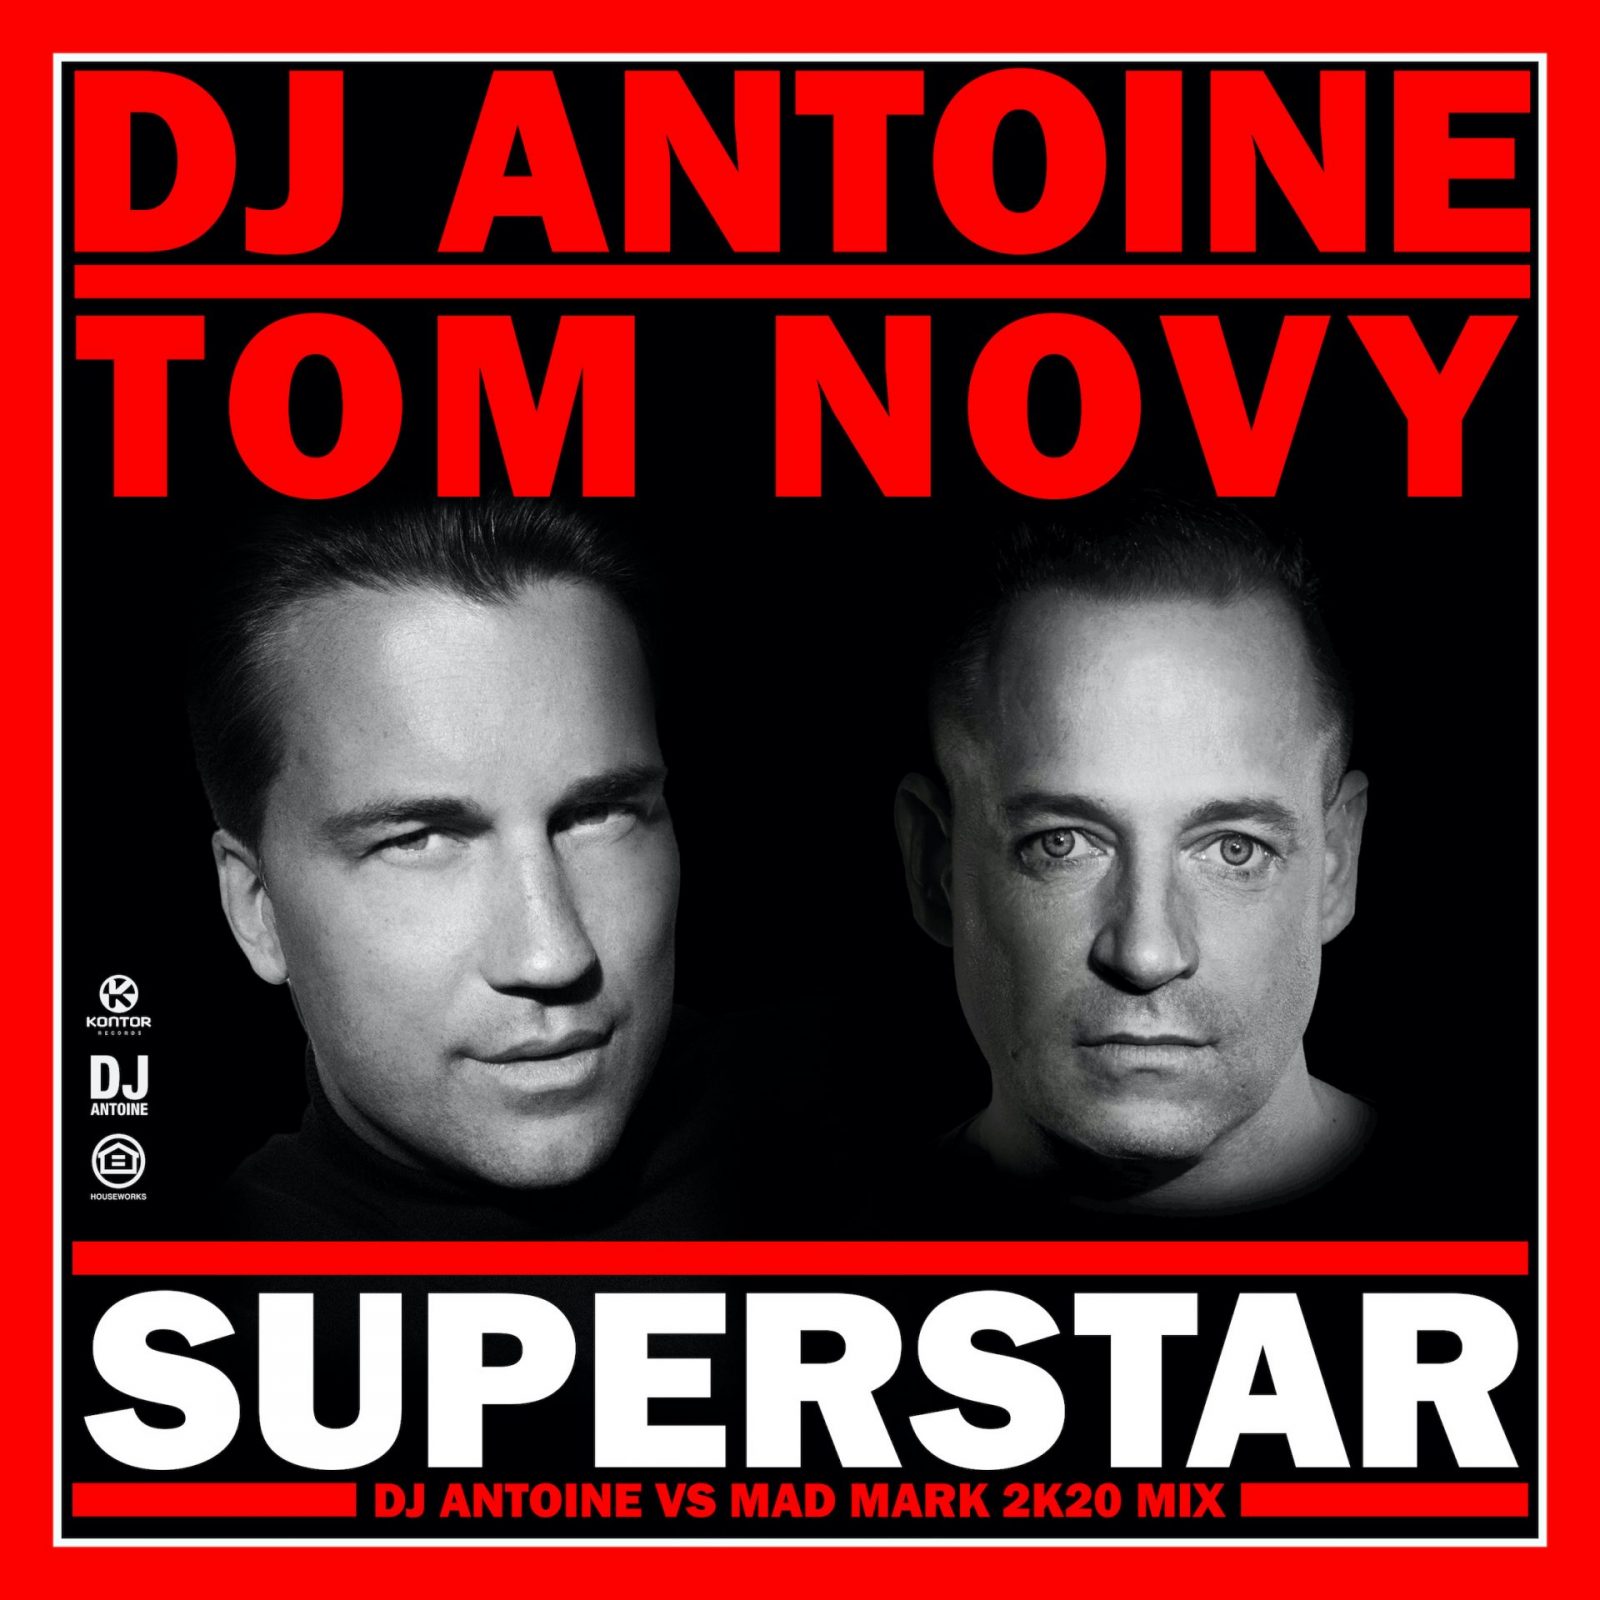 DJ ANTOINE & TOM NOVY "SUPERSTAR"